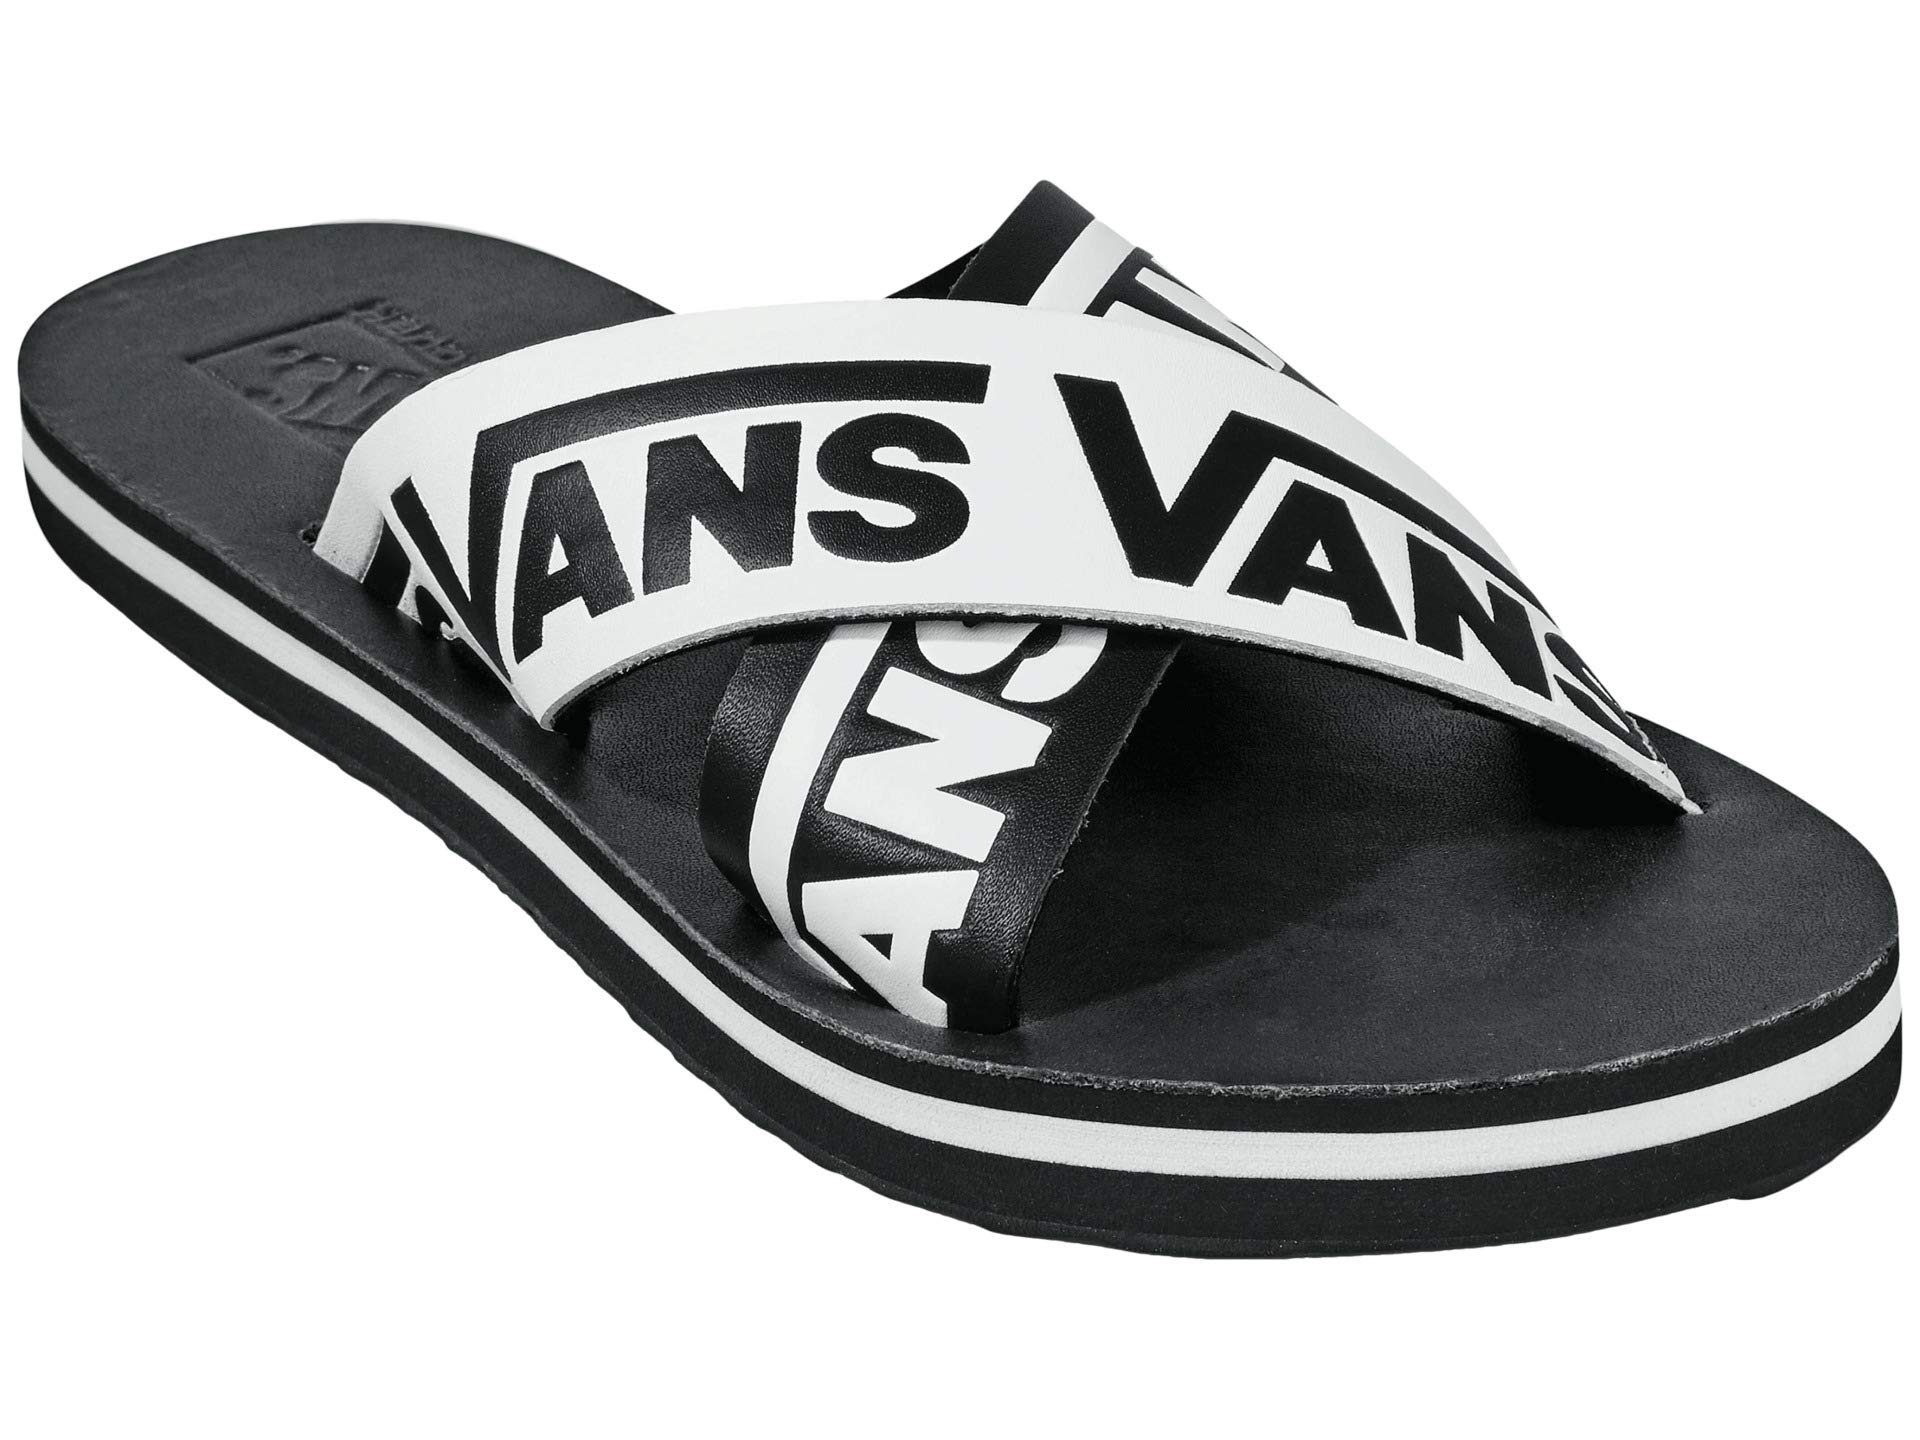 Сандалии Vans, Cross Strap классическая обувь без шнуровки vans цвет black and white checker white